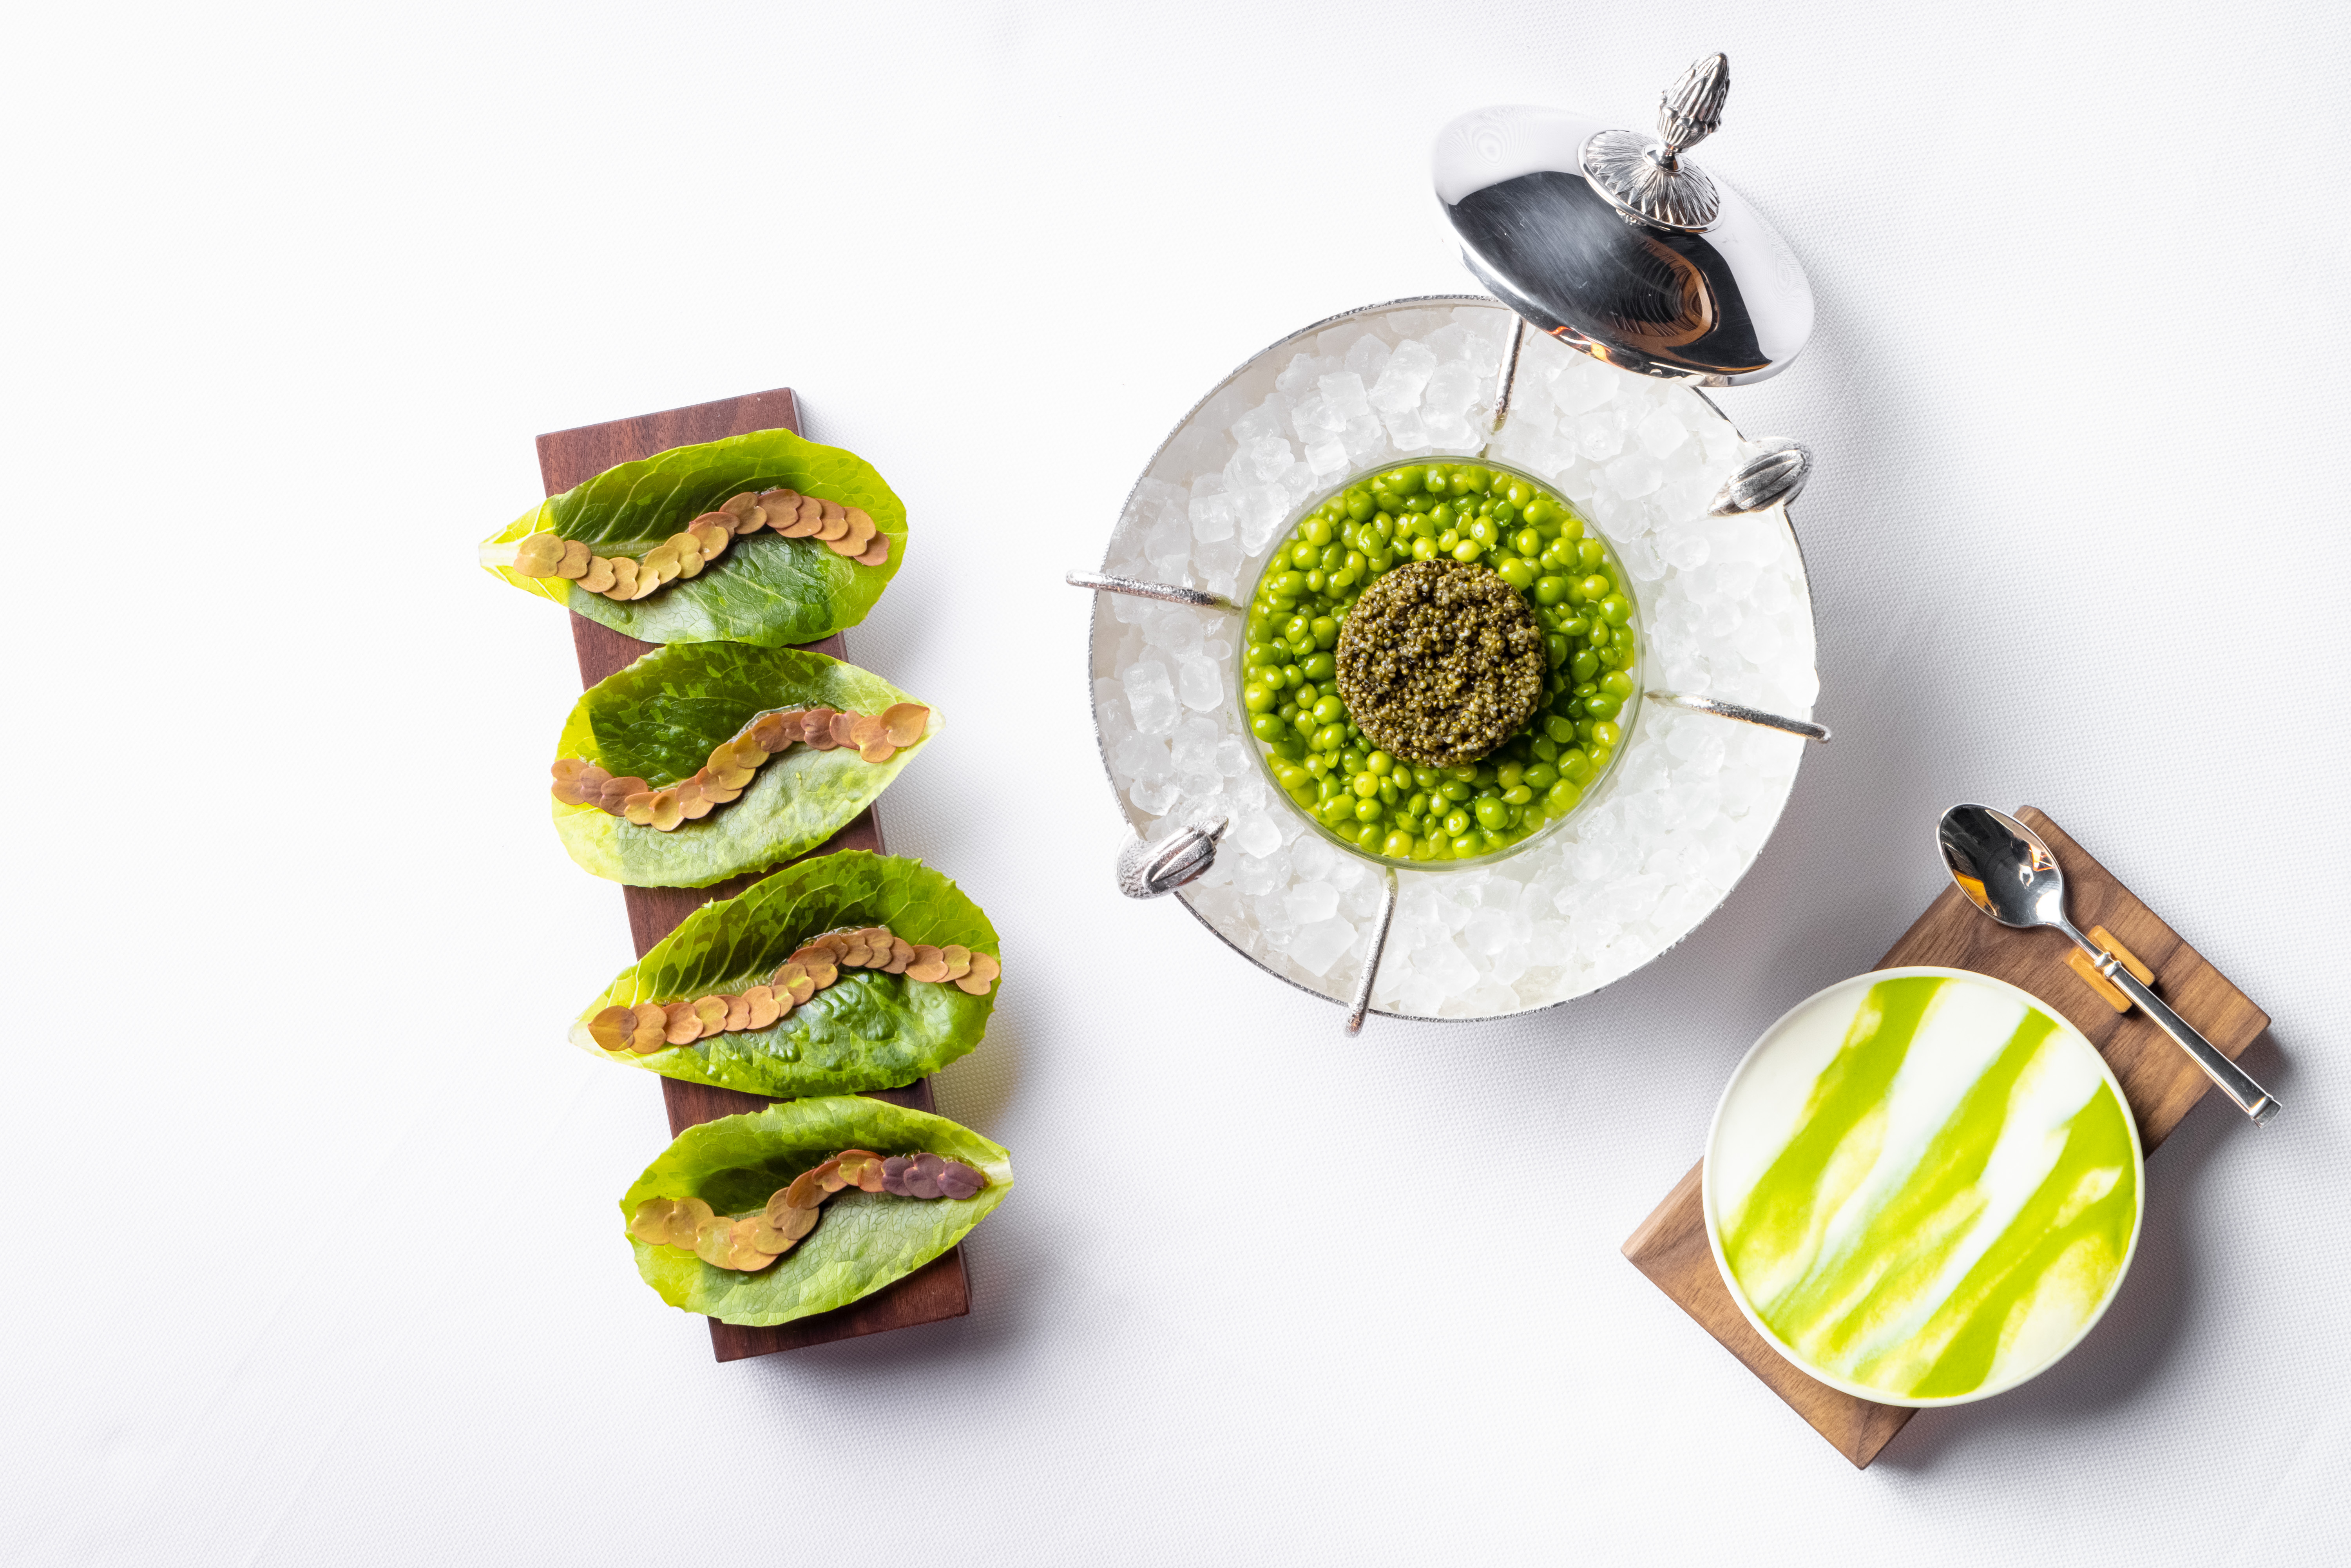 Tonburi caviar sits next to lettuce wraps and vegan creme fraiche